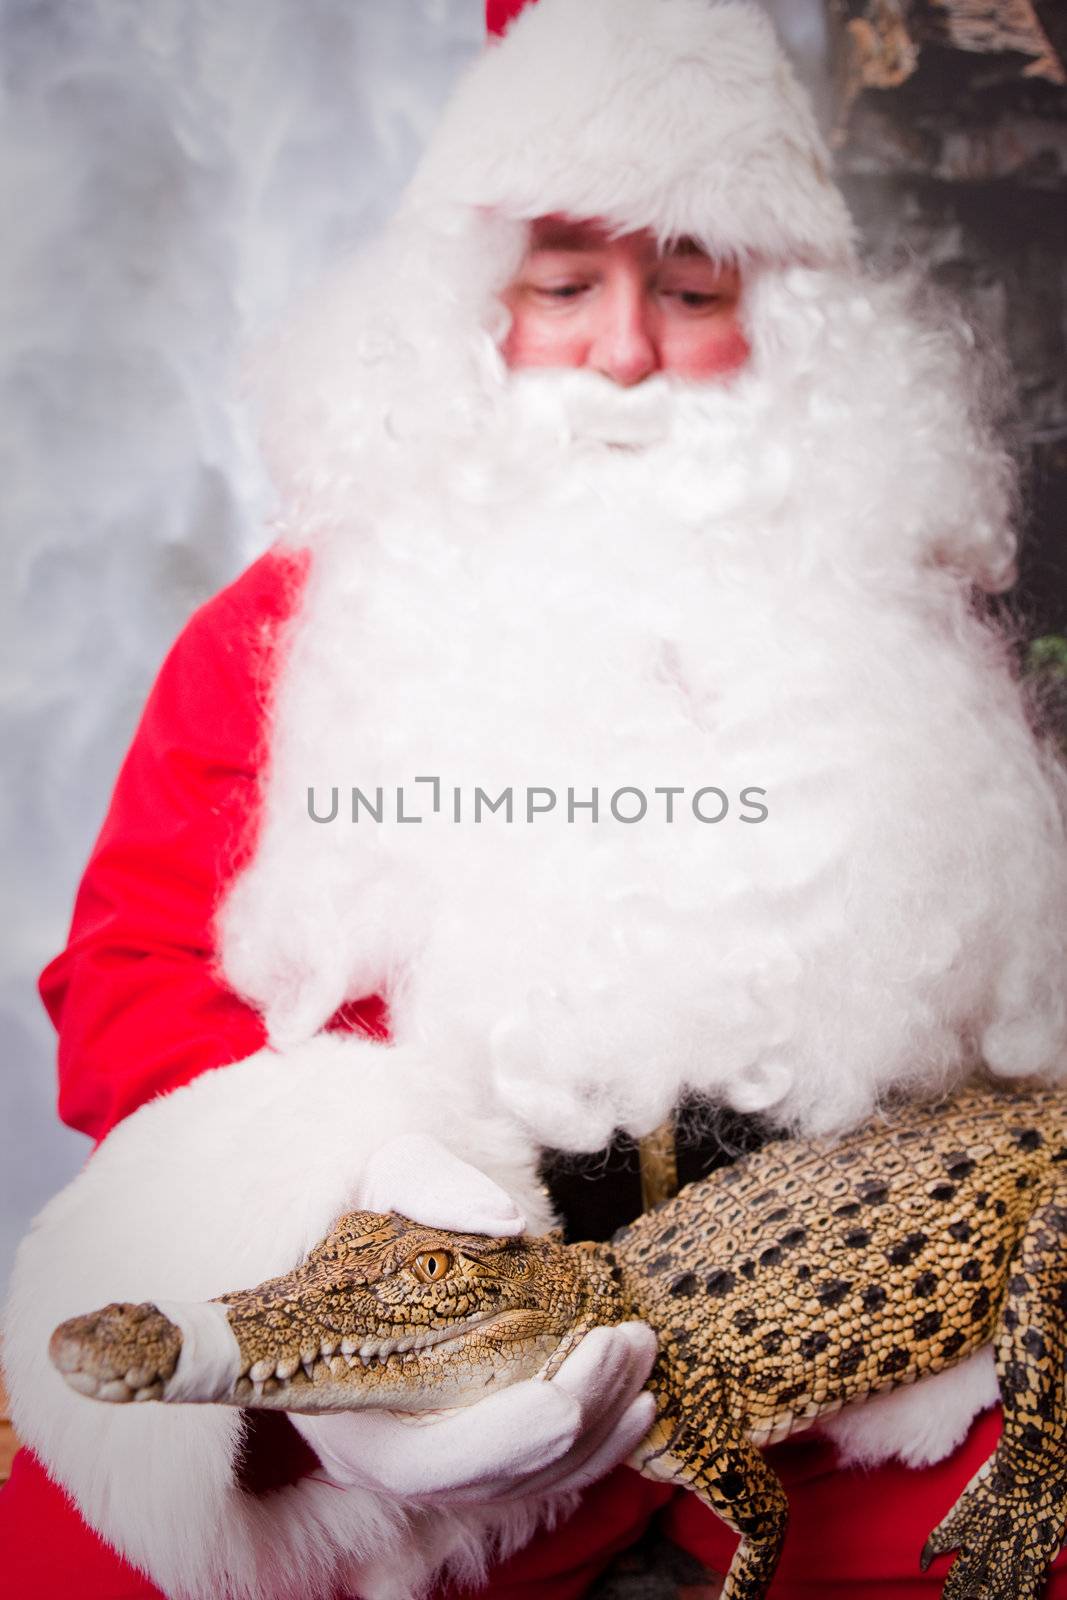 Santa Claus with wild animal